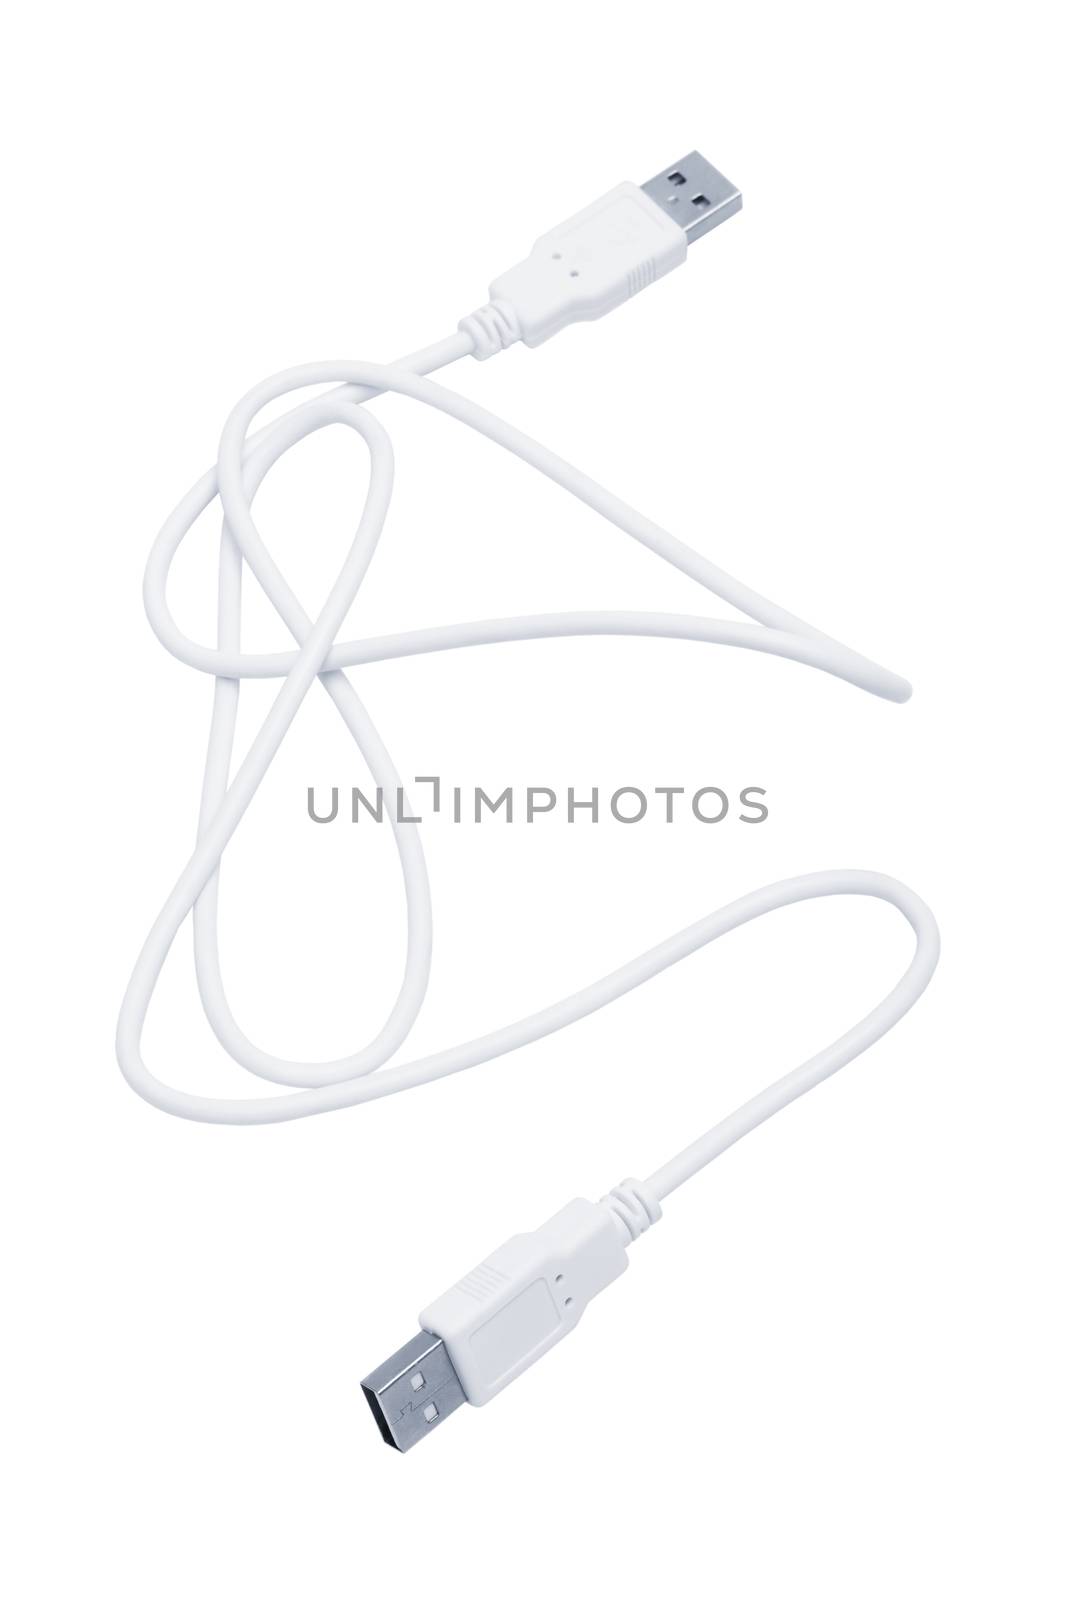 New plug usb on a white background